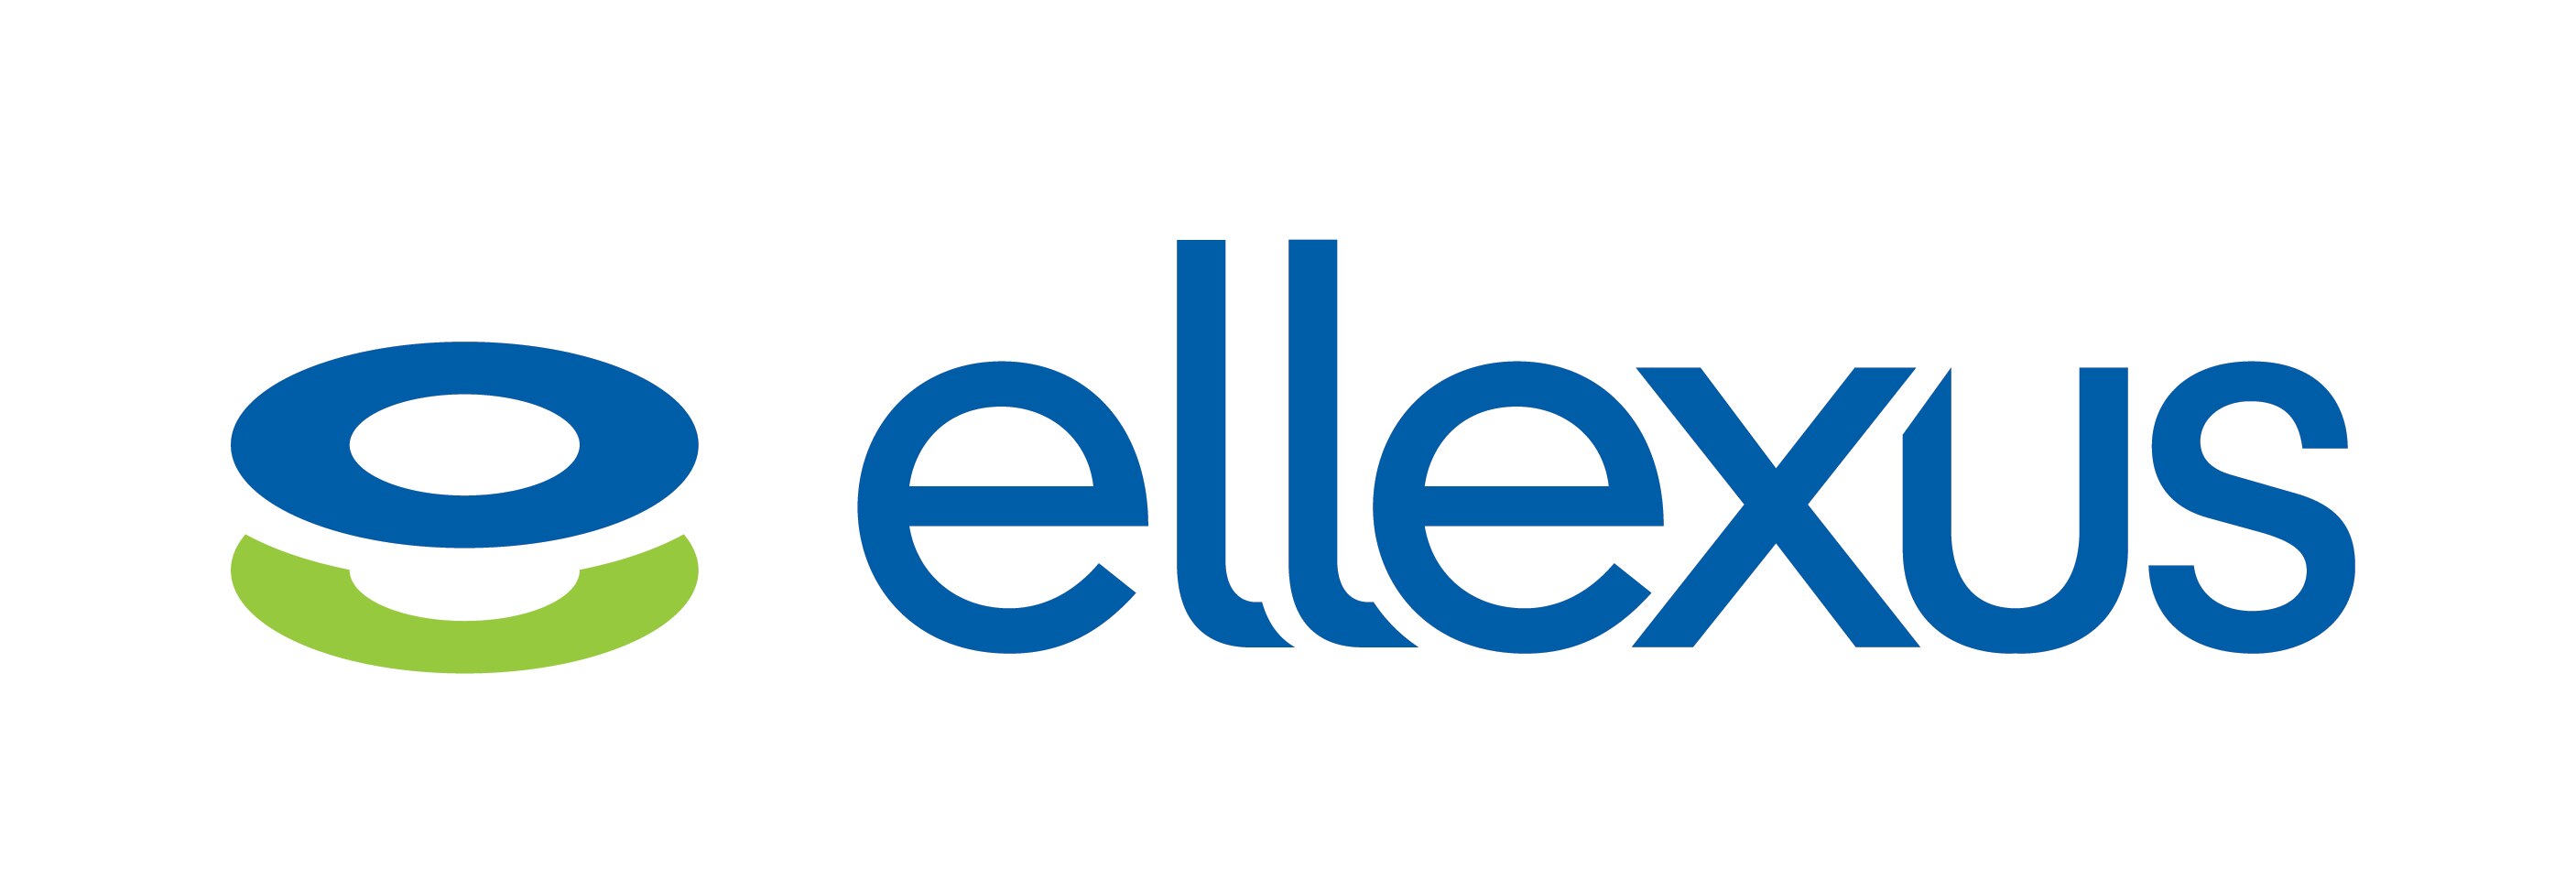 Ellexus (logo). 